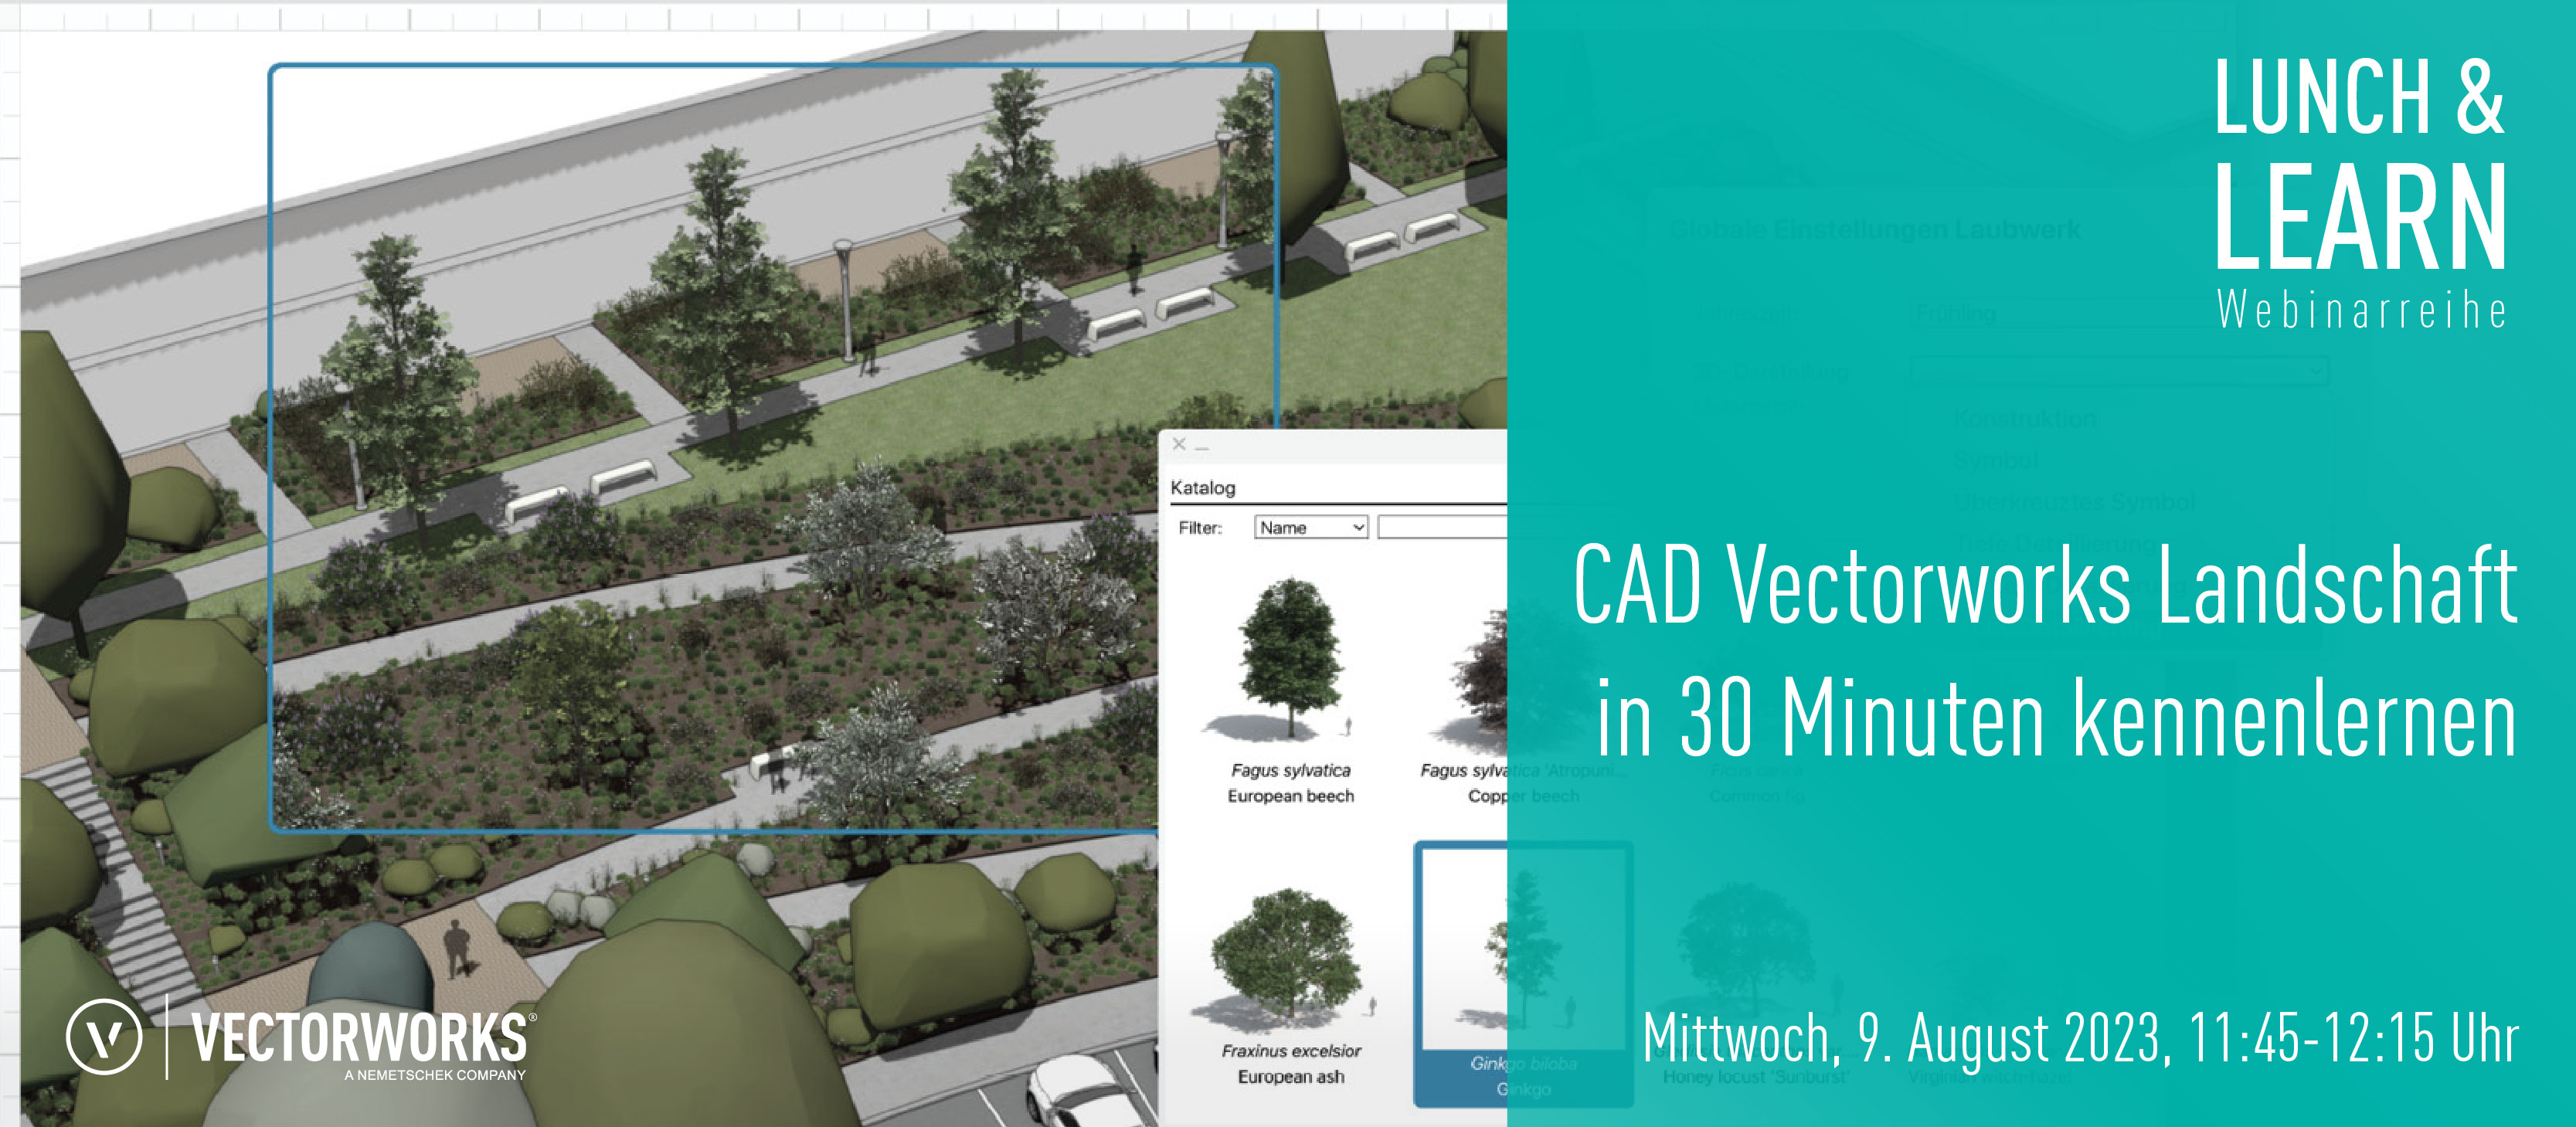 Webinar: CAD Vectorworks Landschat kennenlernen